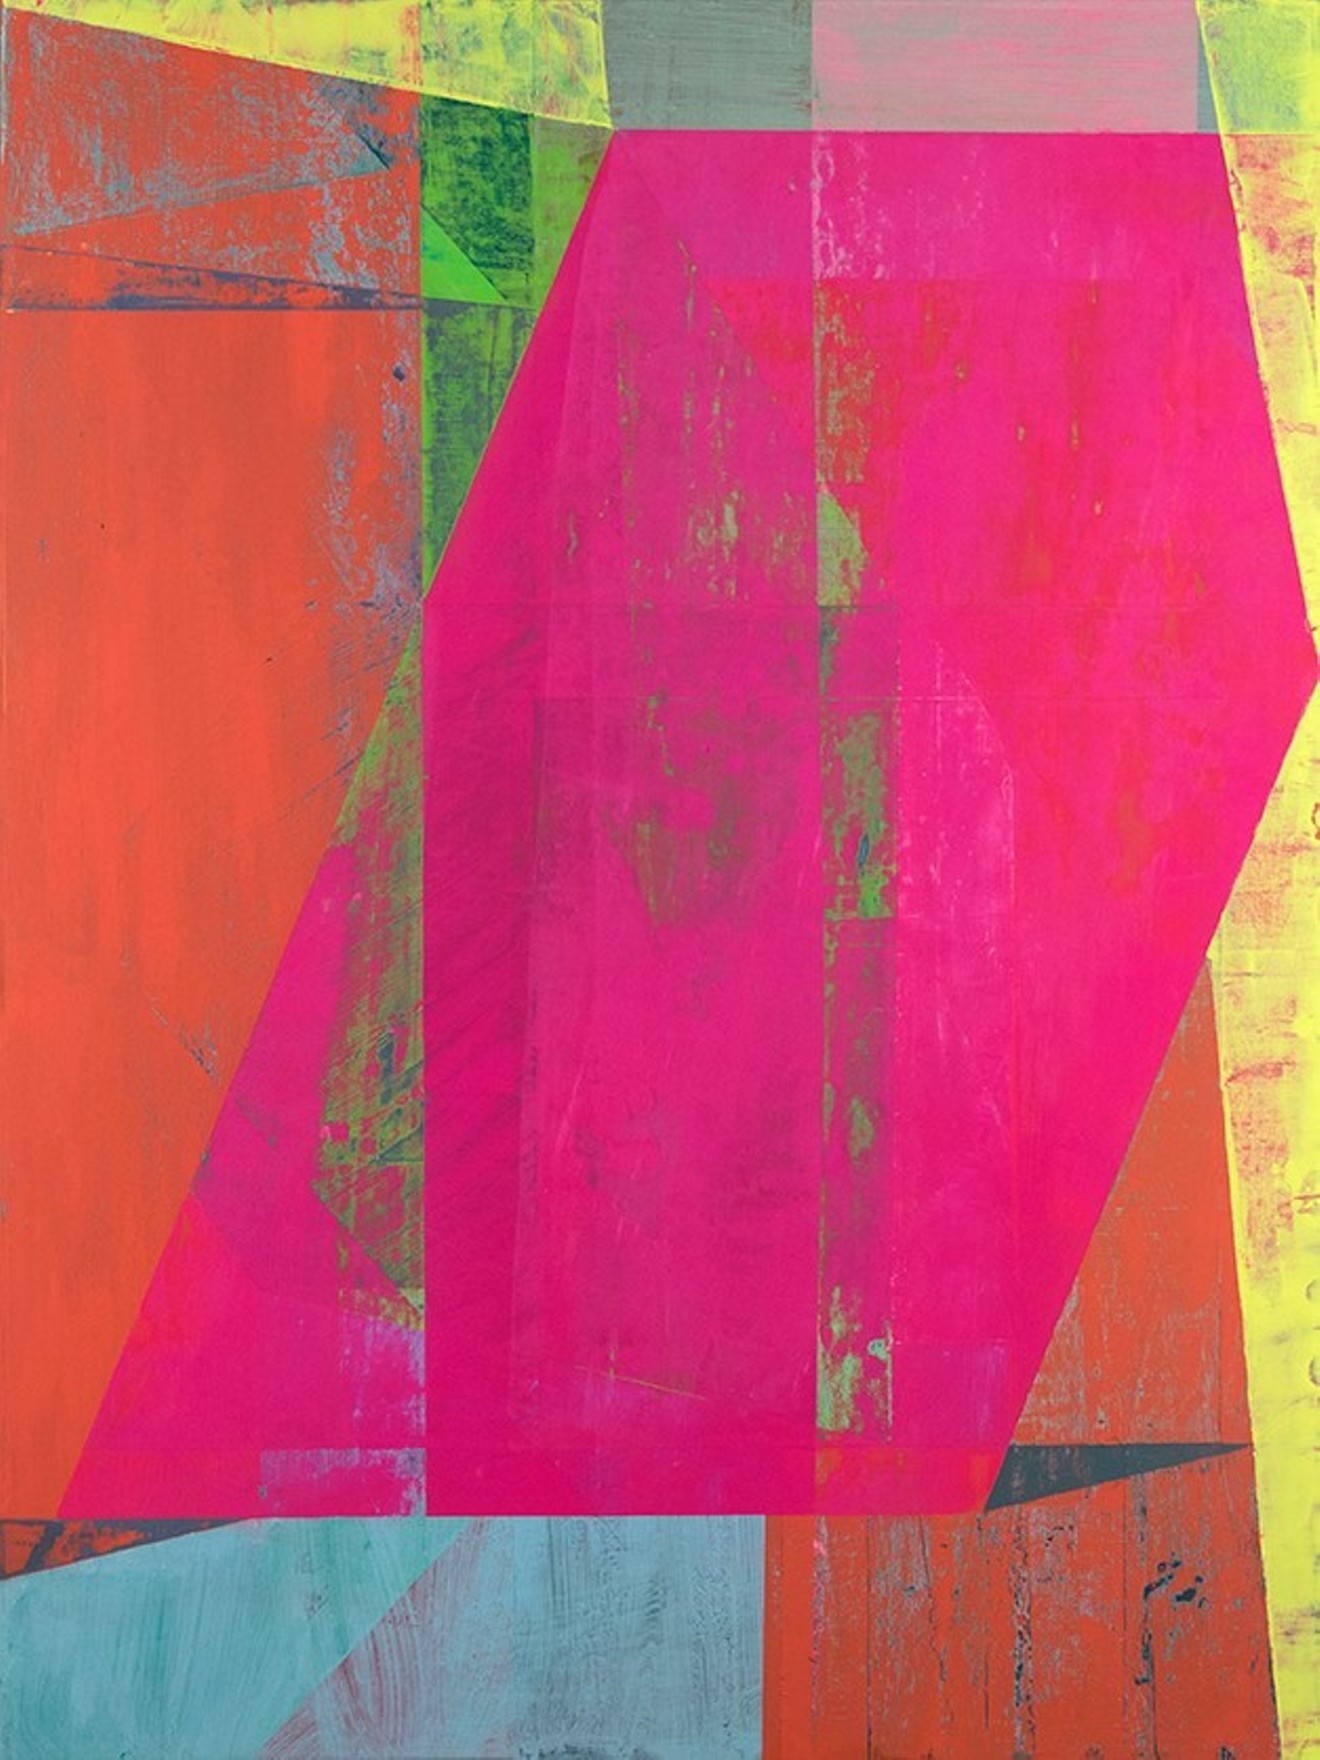 Anthony Falcetta, "invert sugar," acrylic and gypsum on canvas.